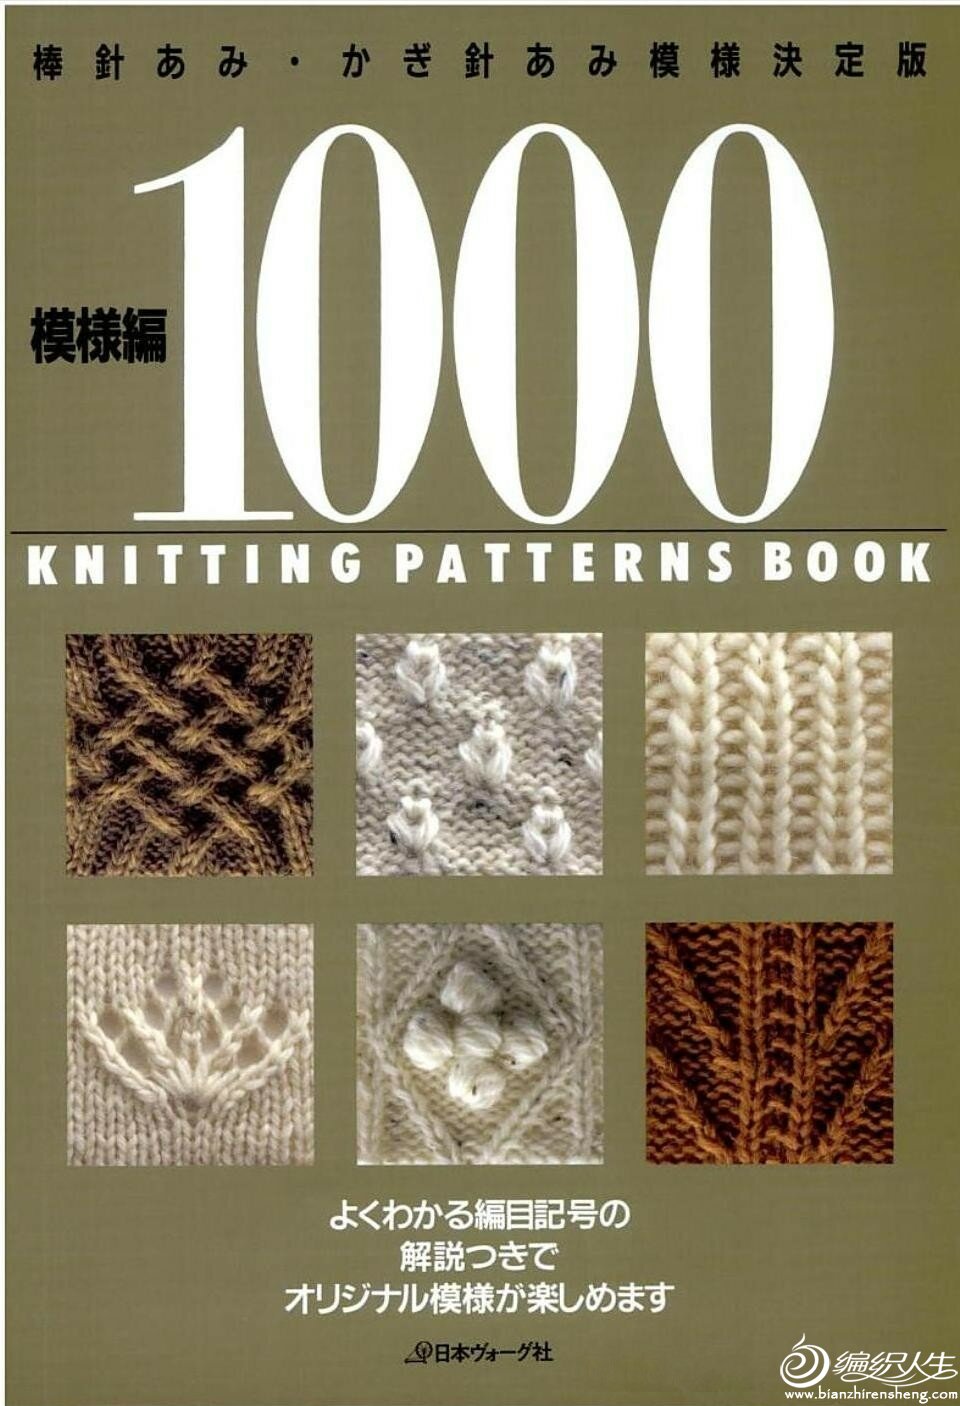 0-Knitting patterns book 1000 NV7183.jpg